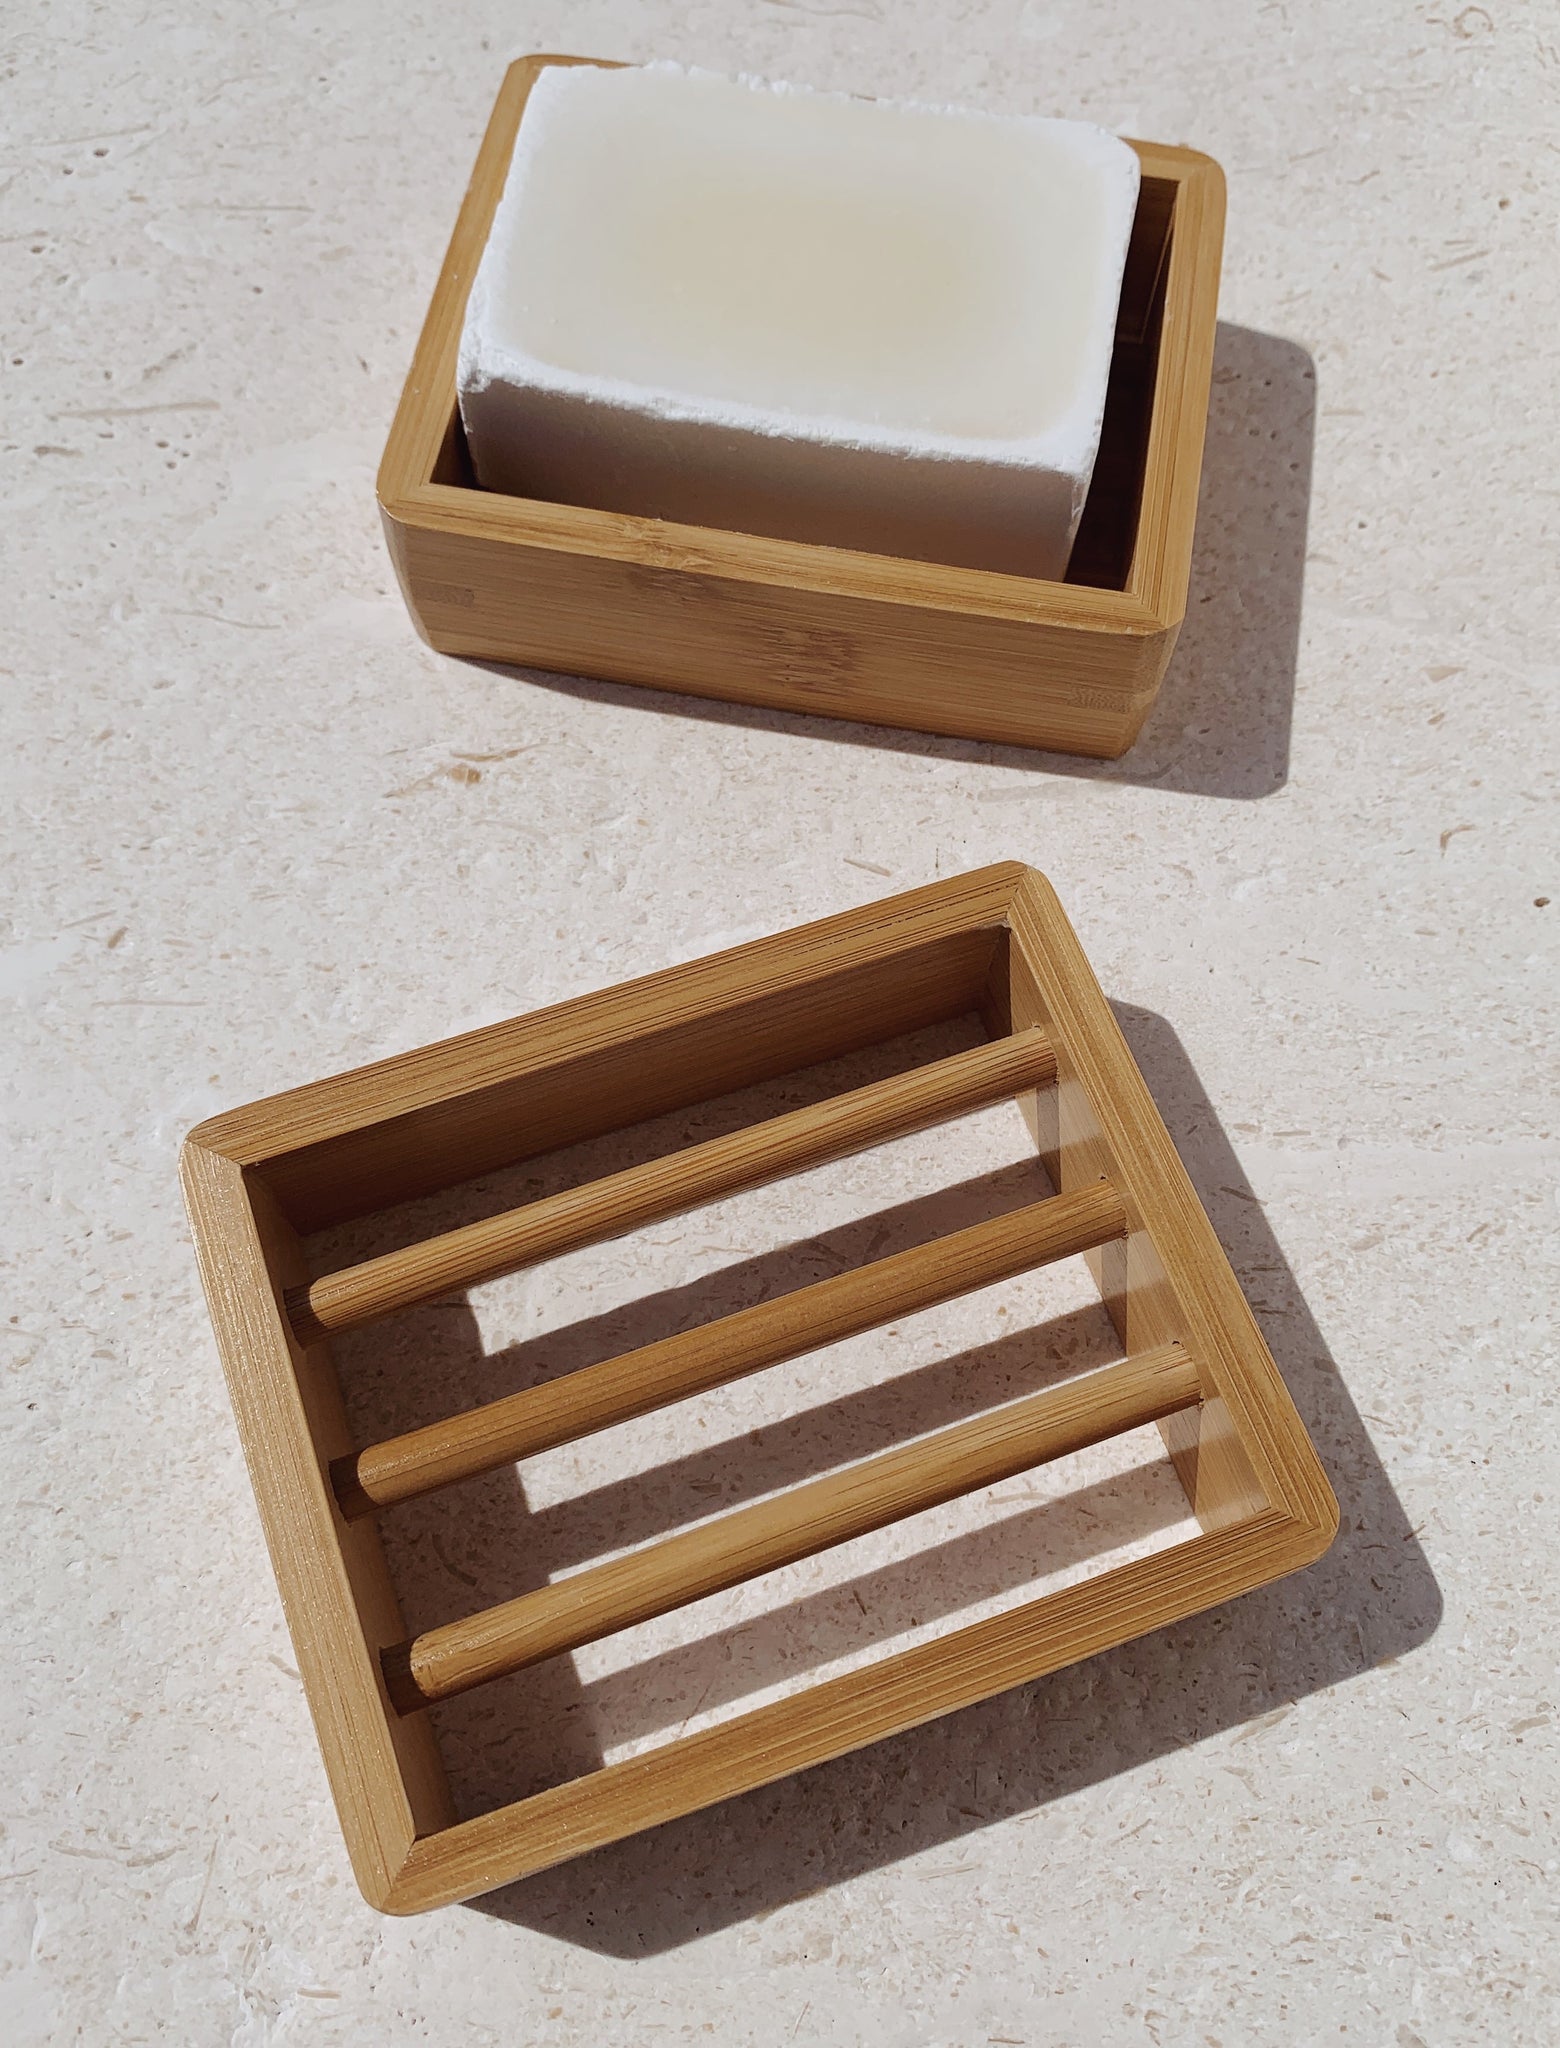 moso bamboo soap shelf